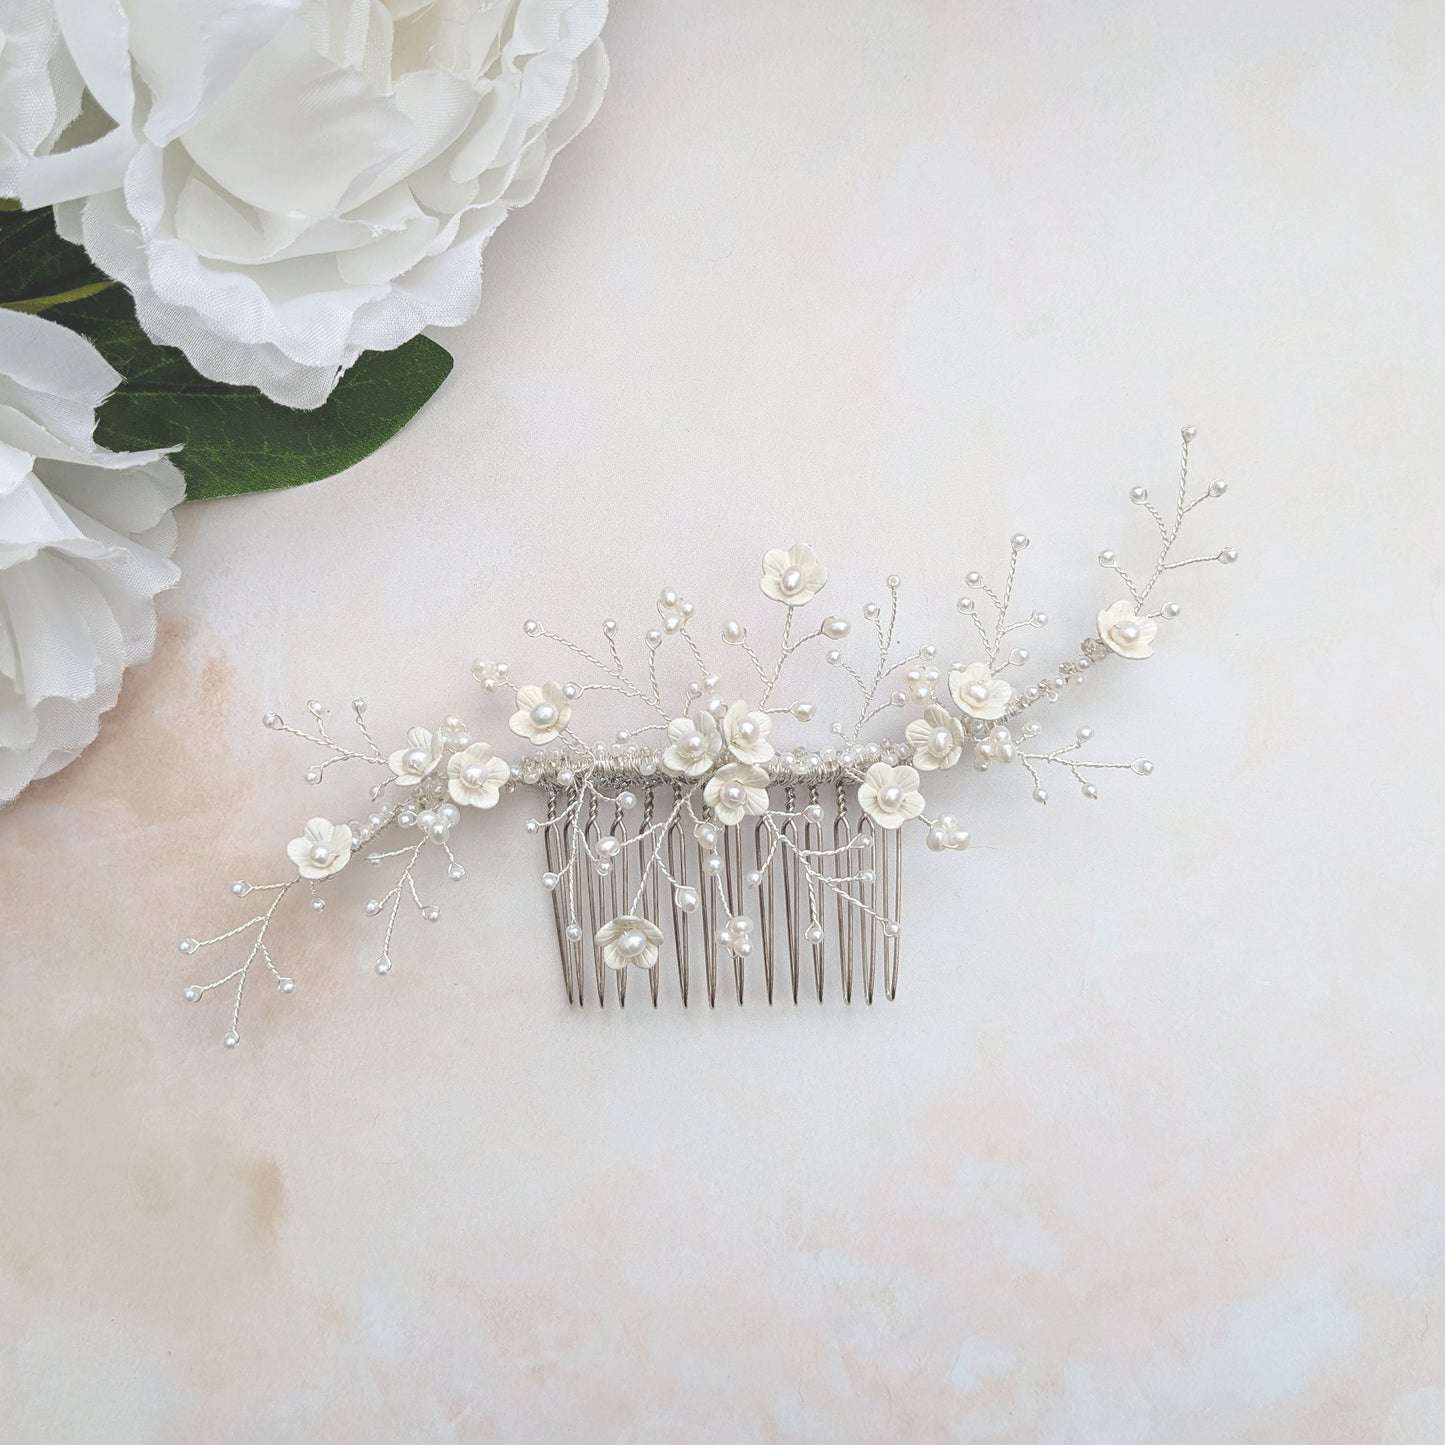 Floral bridal headpiece with White flowers & pearls - Susie Warner